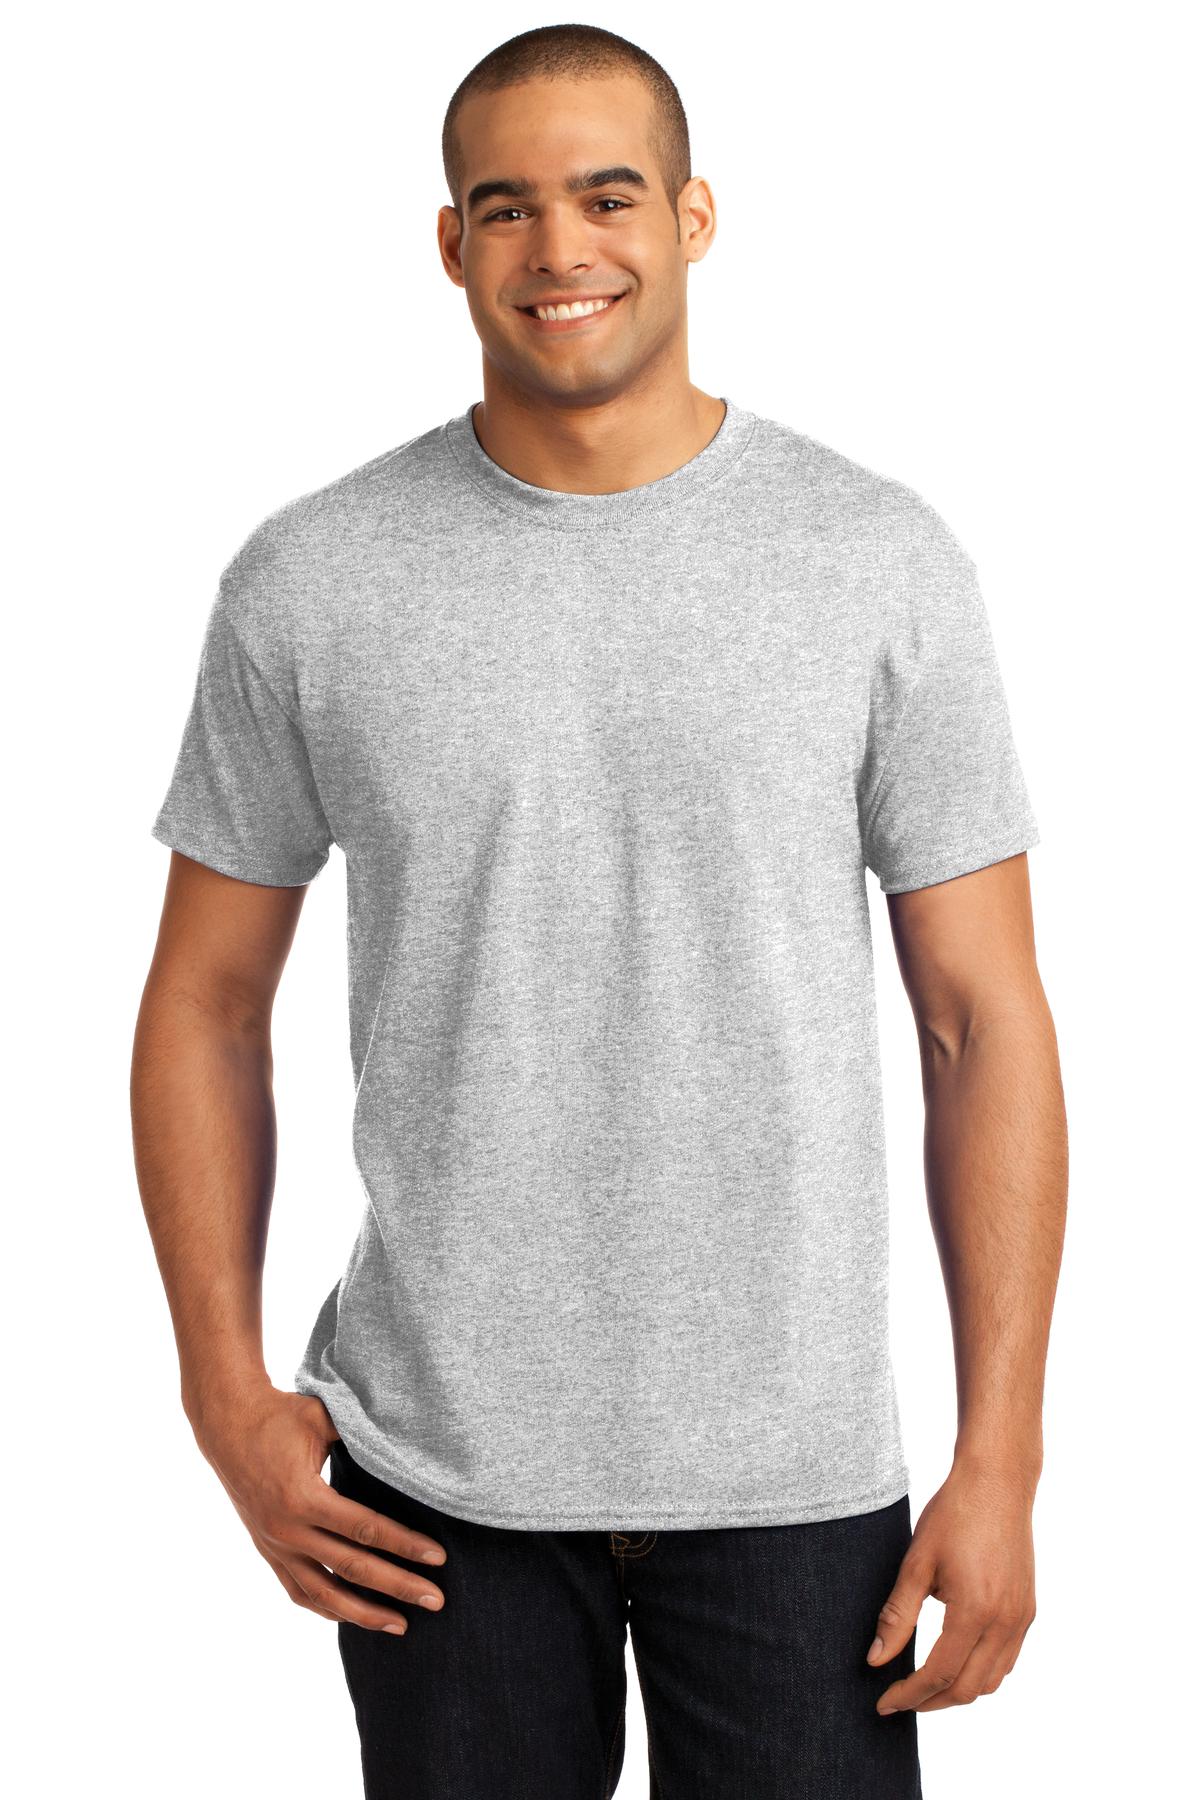 Hanes® - EcoSmart® 50/50 Cotton/Poly T-Shirt. 5170 - DFW Impression